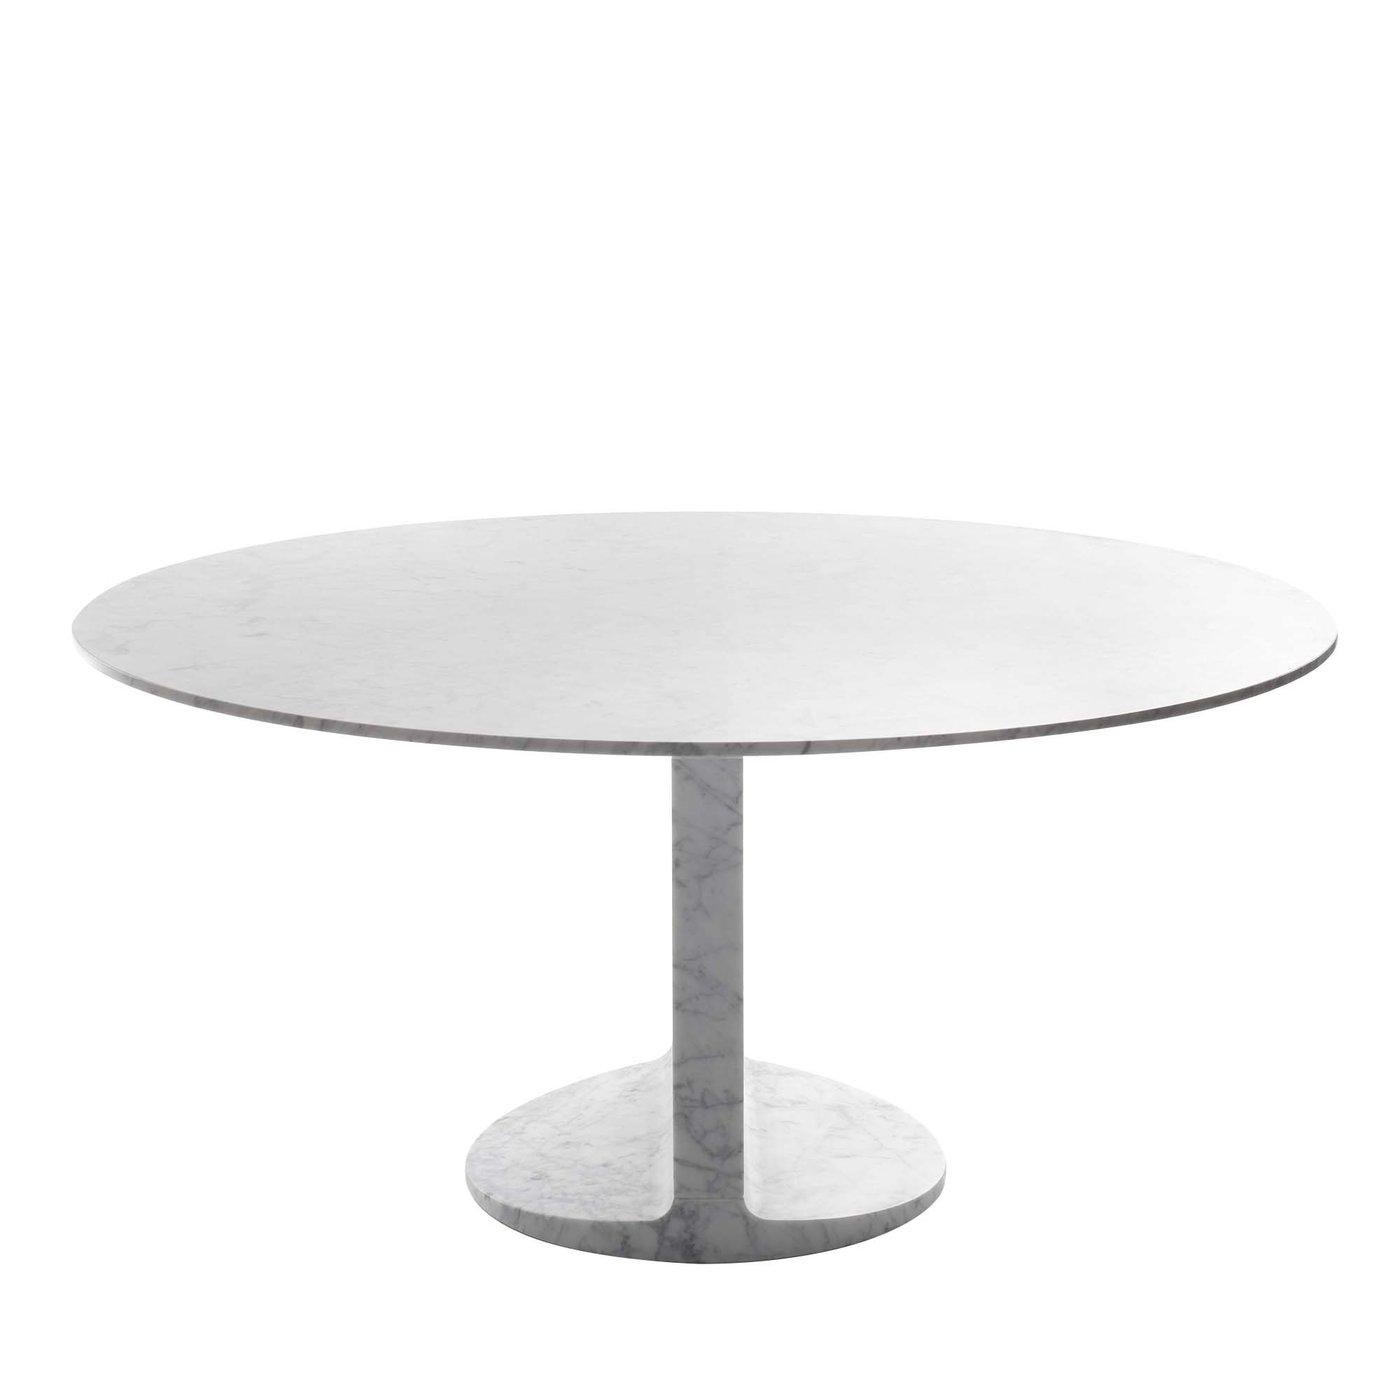 Italian Mimmo Dining Table, Design James Irvine, 2010